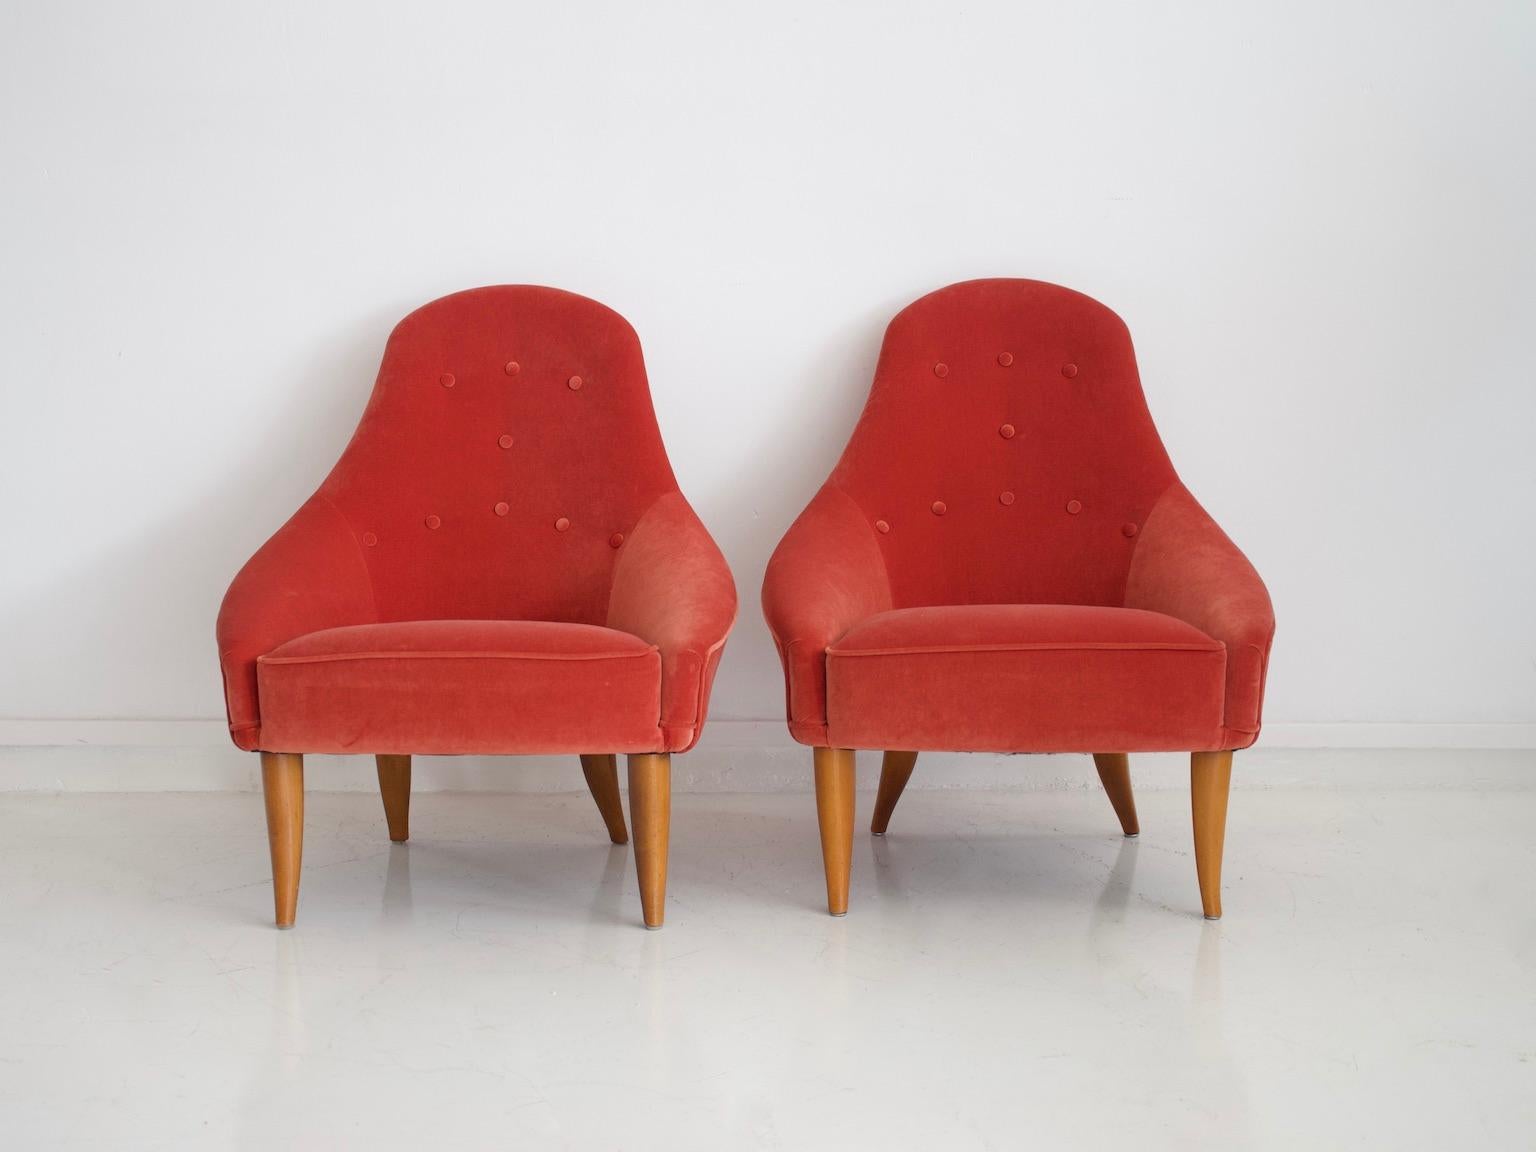 Kerstin Hörlin-Holmquist designed this pair of 